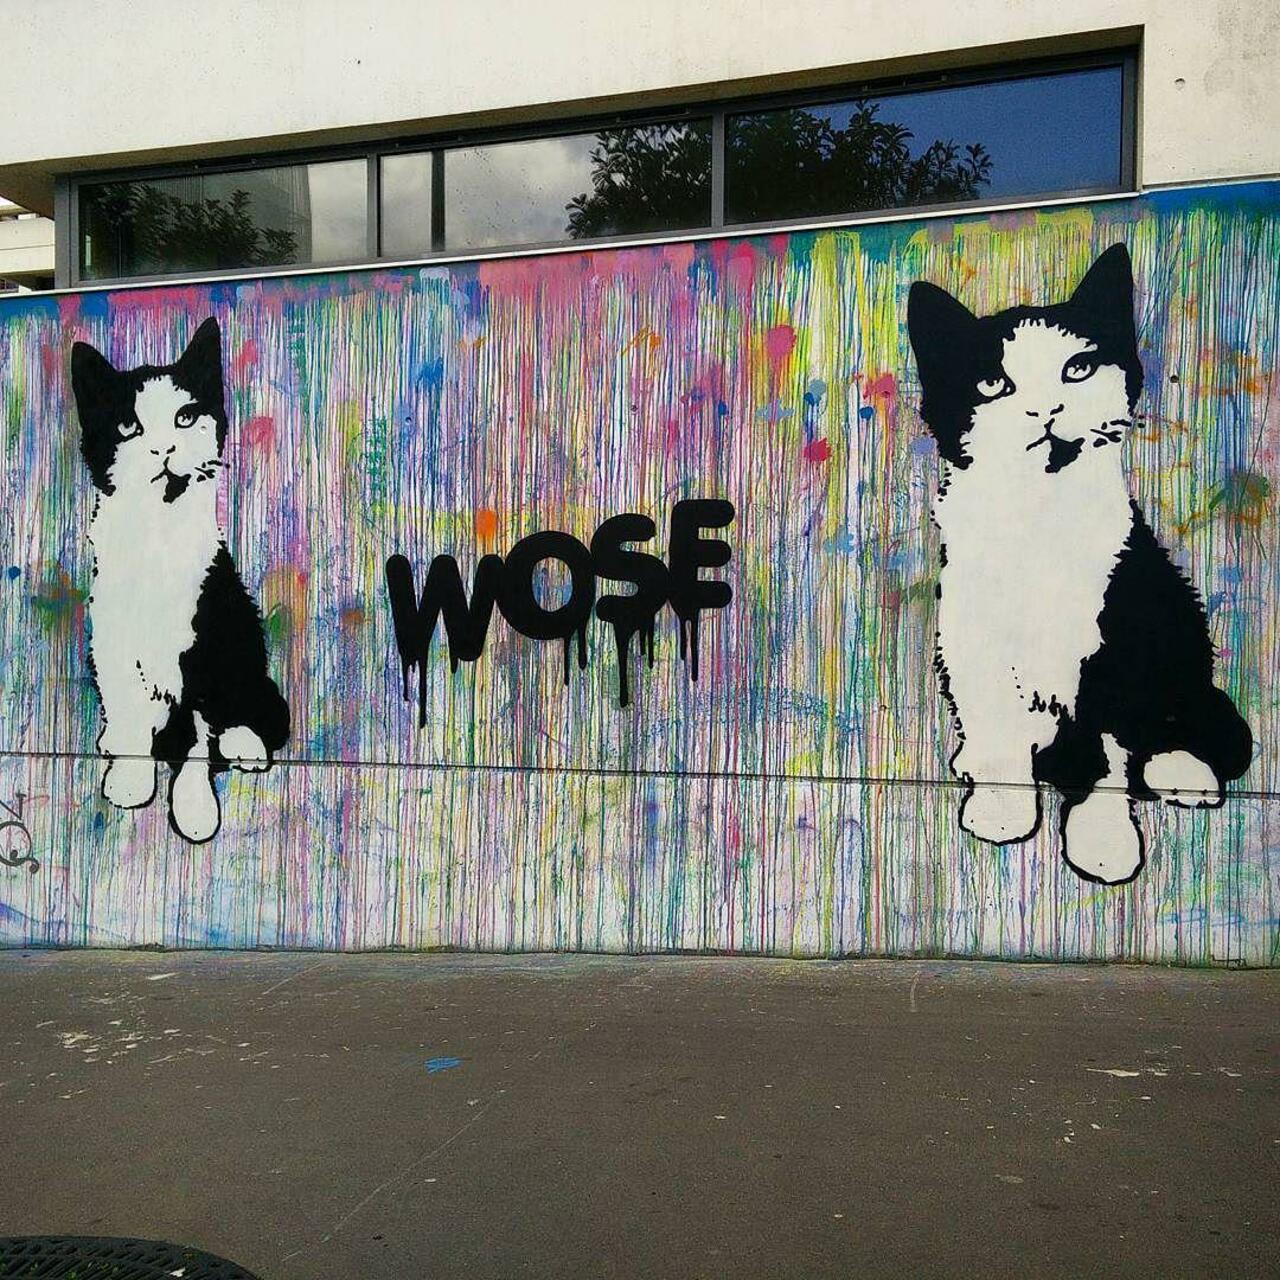 #Paris #graffiti photo by @ceky_art http://ift.tt/1O9wy5E #StreetArt https://t.co/PhXqR8hvzC